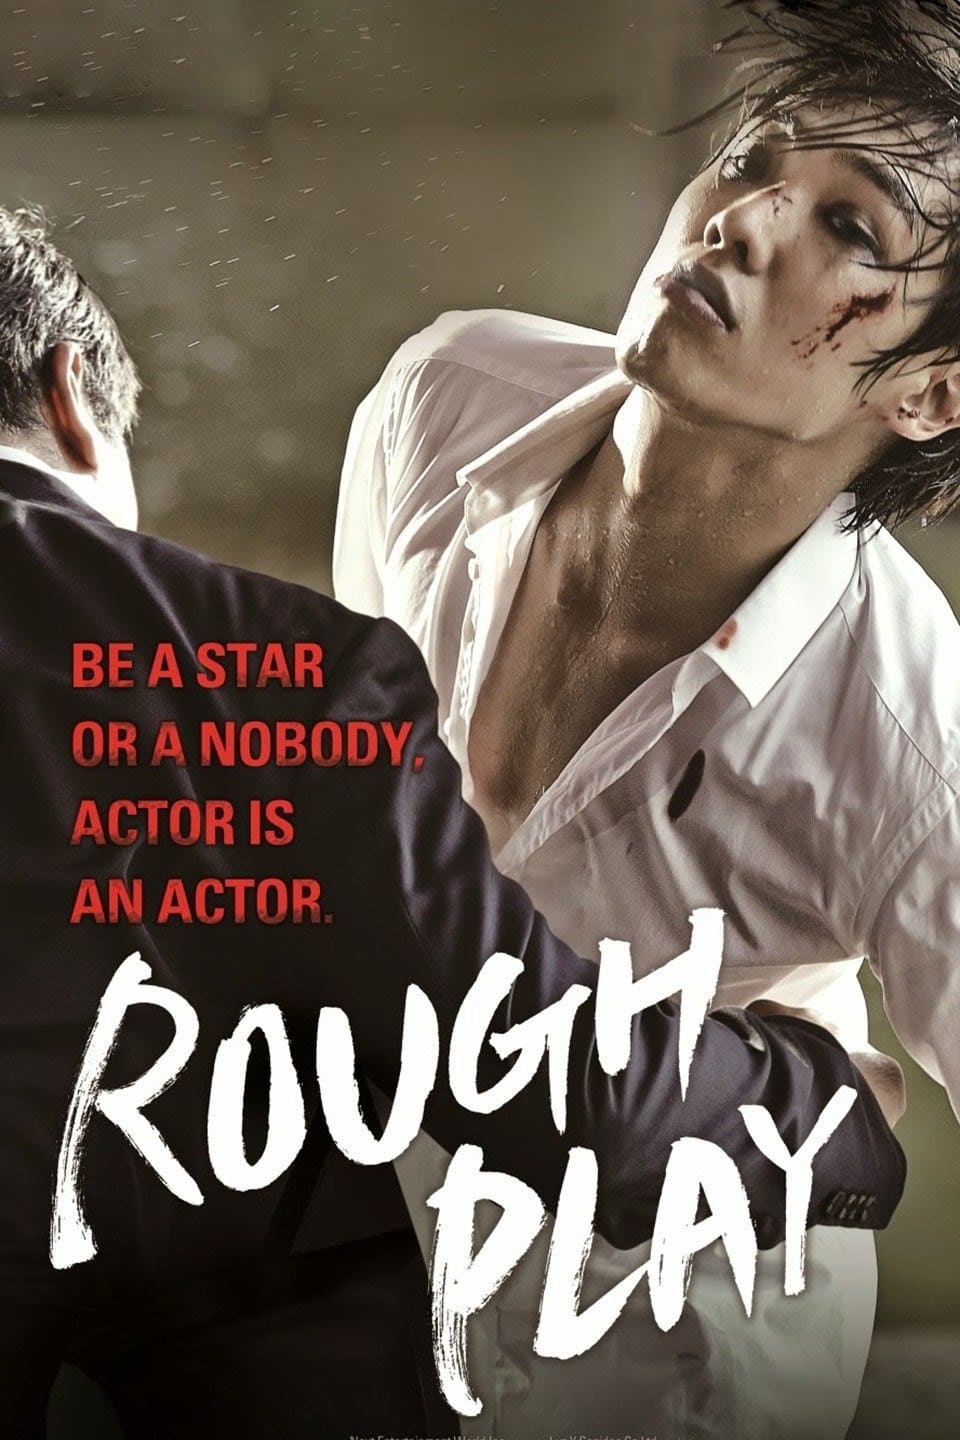 Rough Play (2013)